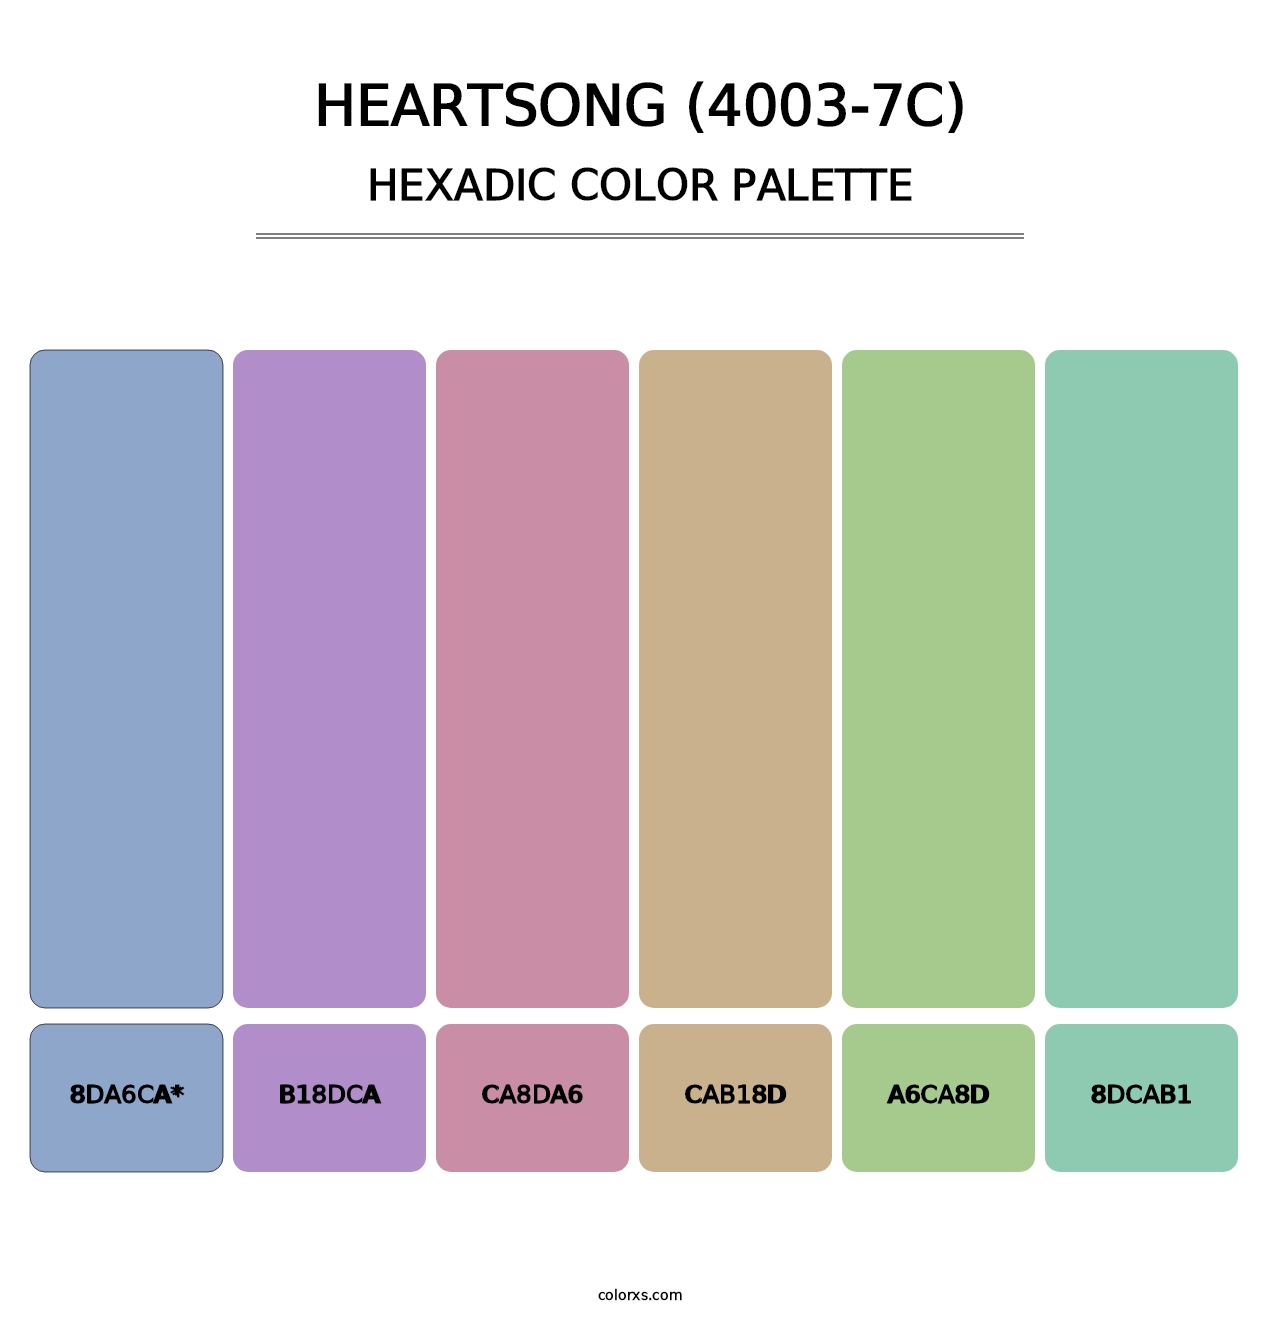 Heartsong (4003-7C) - Hexadic Color Palette